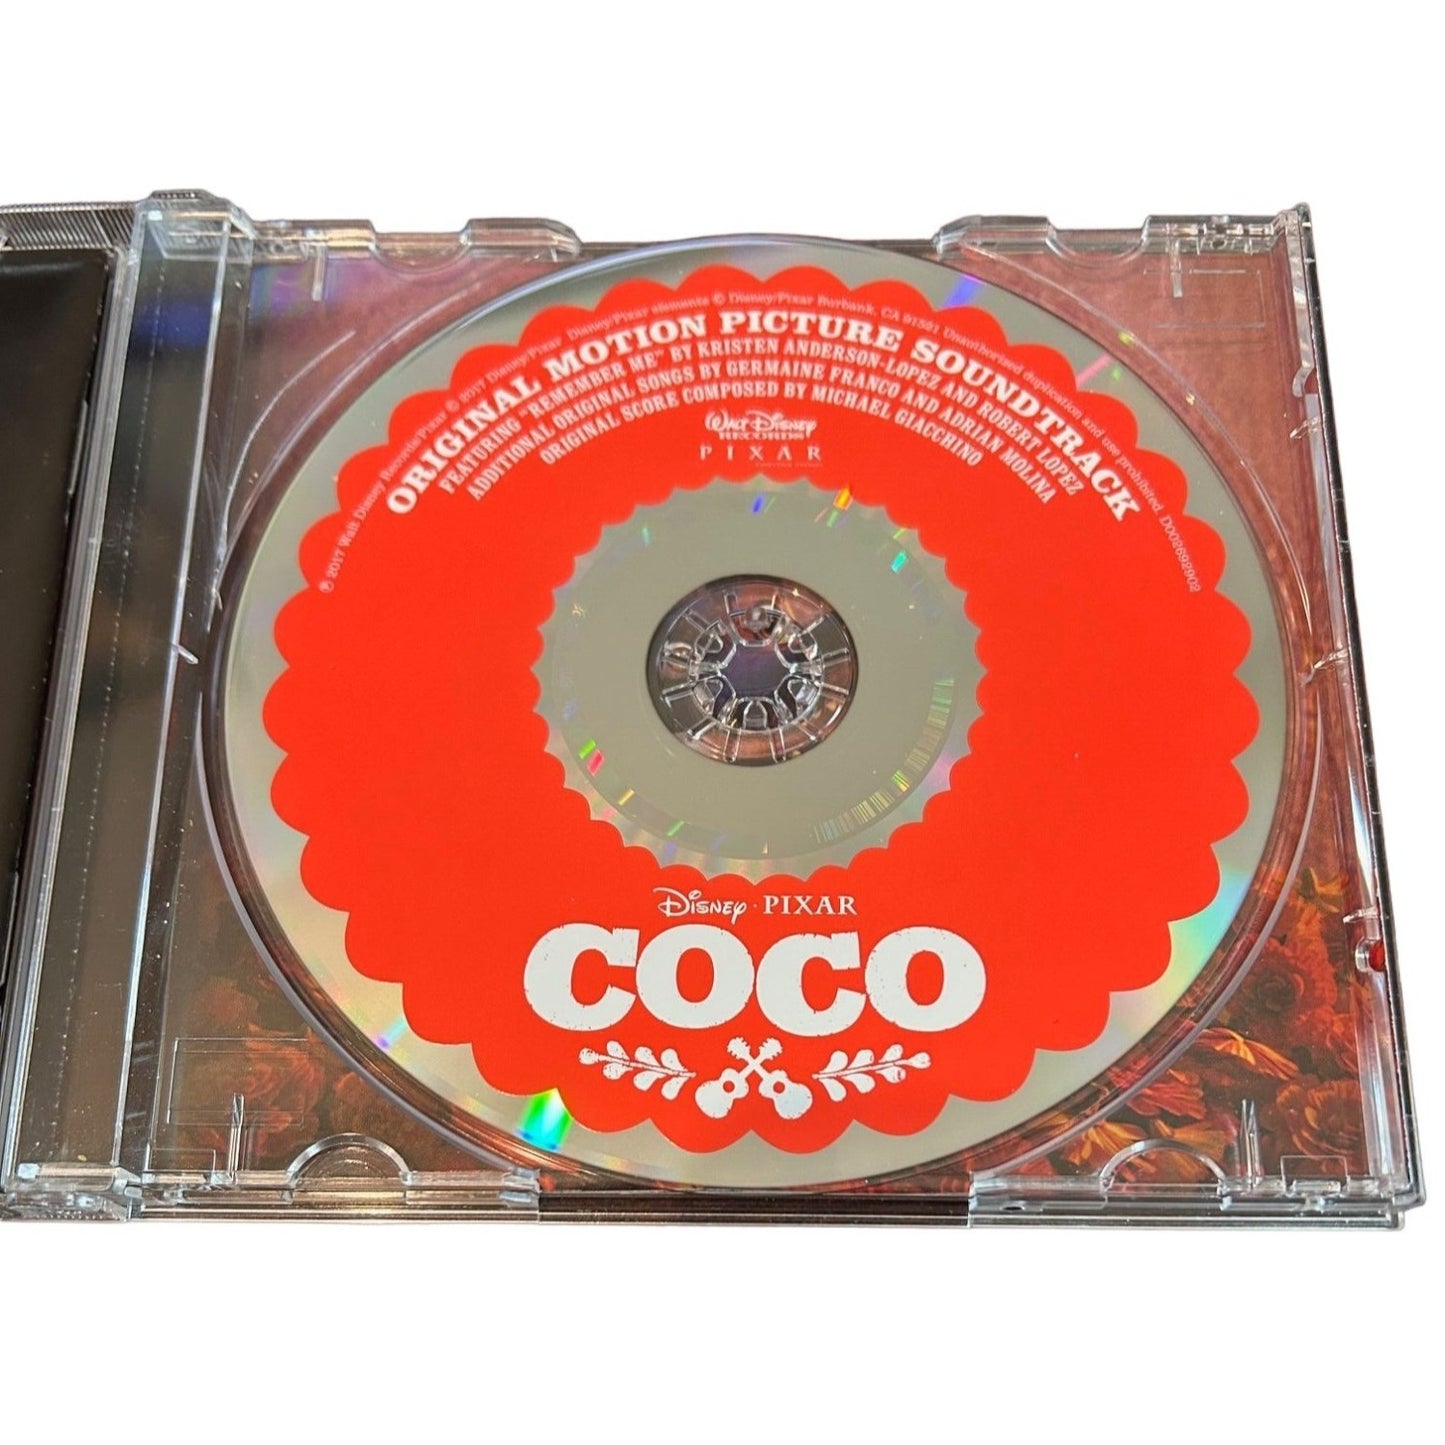 Disney Pixar Coco Motion Picture Soundtrack Target Exclusive Audio CD